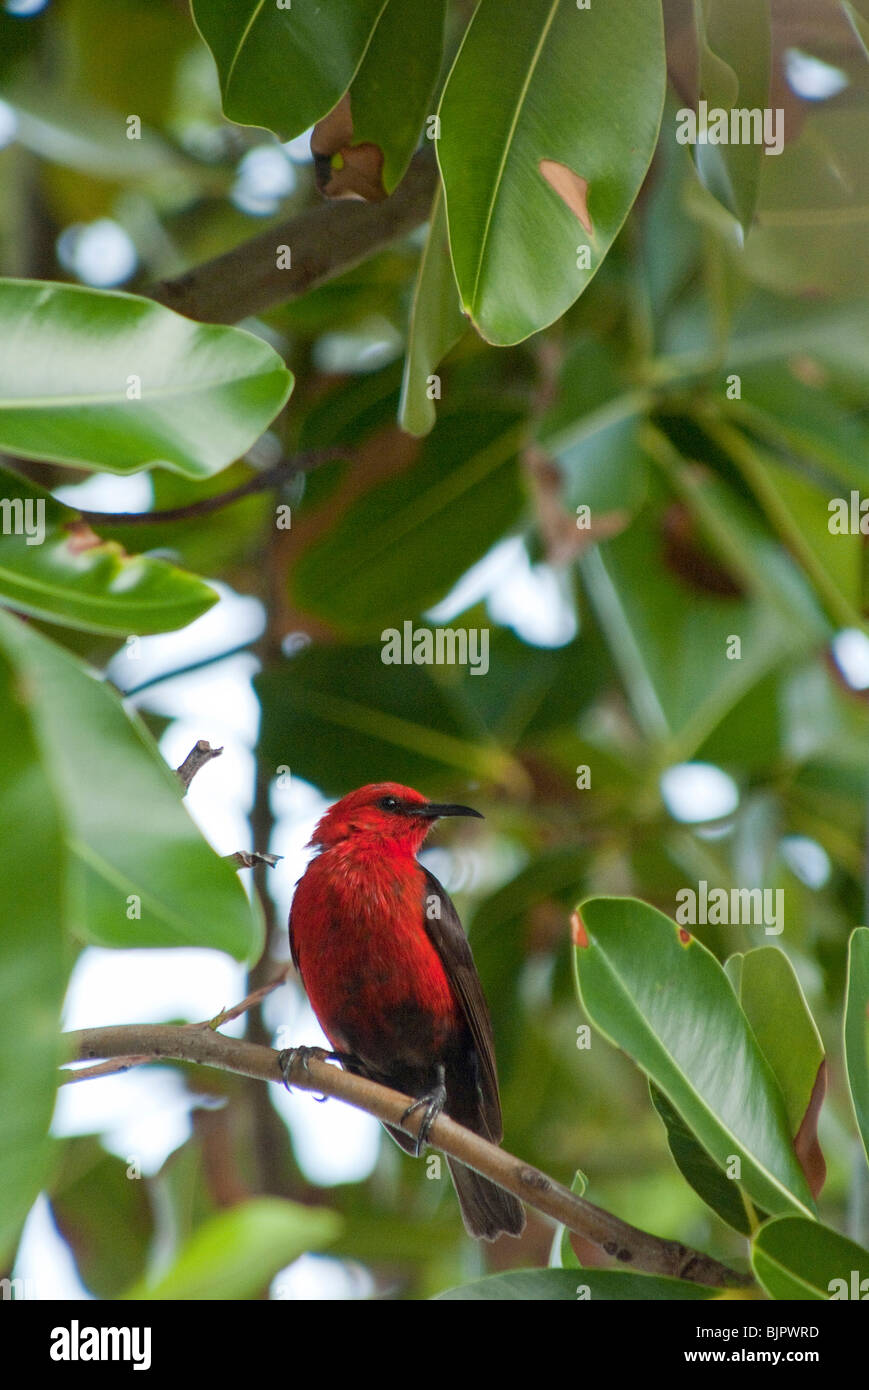 Red bird perching on branch Stock Photo